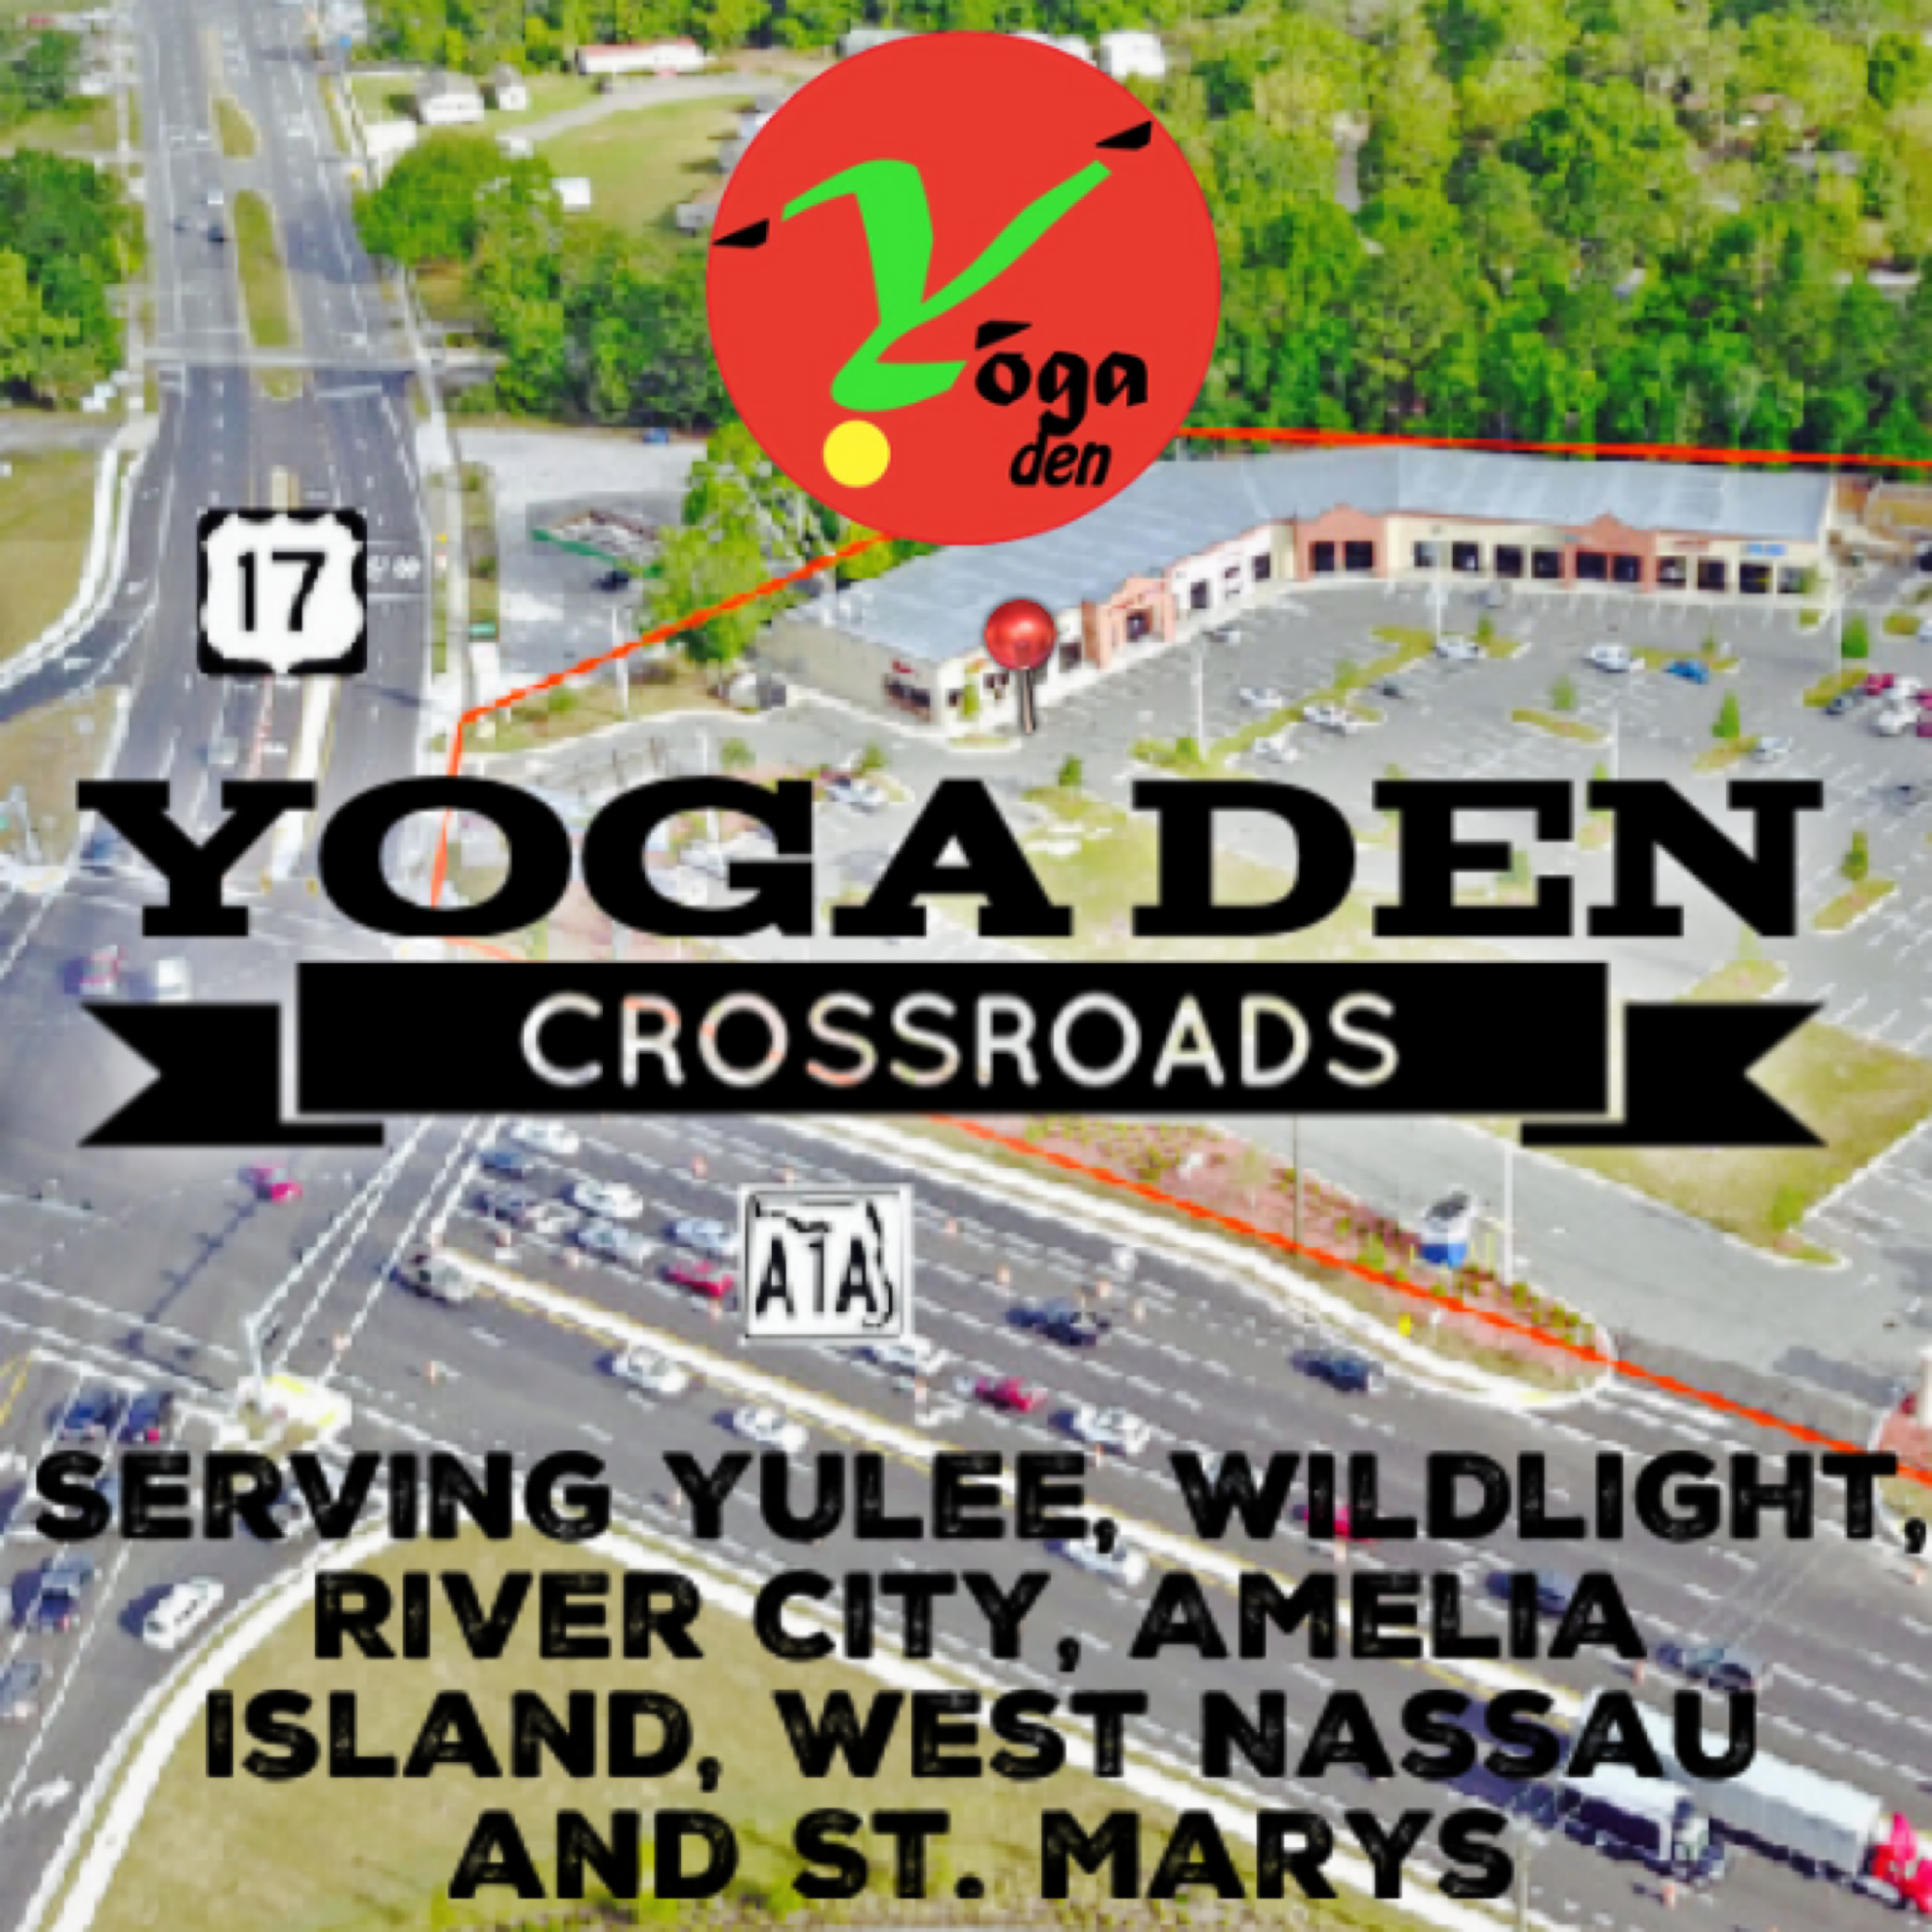 crossroads yoga den banner